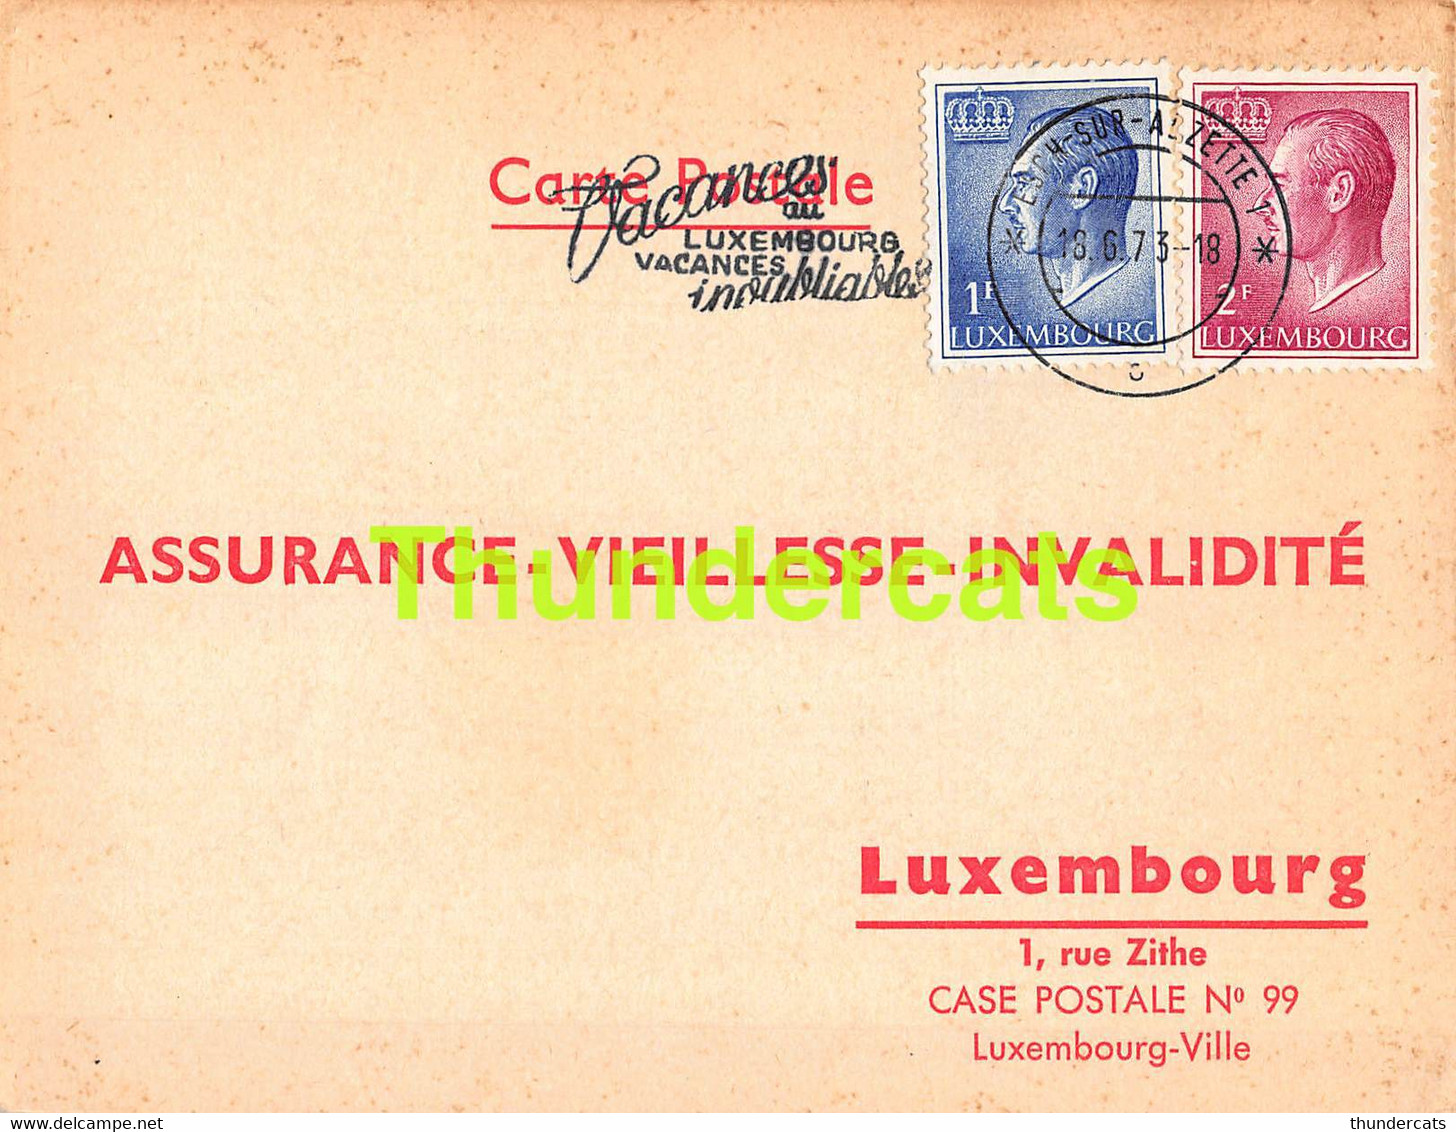 ASSURANCE VIEILLESSE INVALIDITE LUXEMBOURG 1973 ESCH SUR ALZETTE  TESSARO STRAMARE - Lettres & Documents